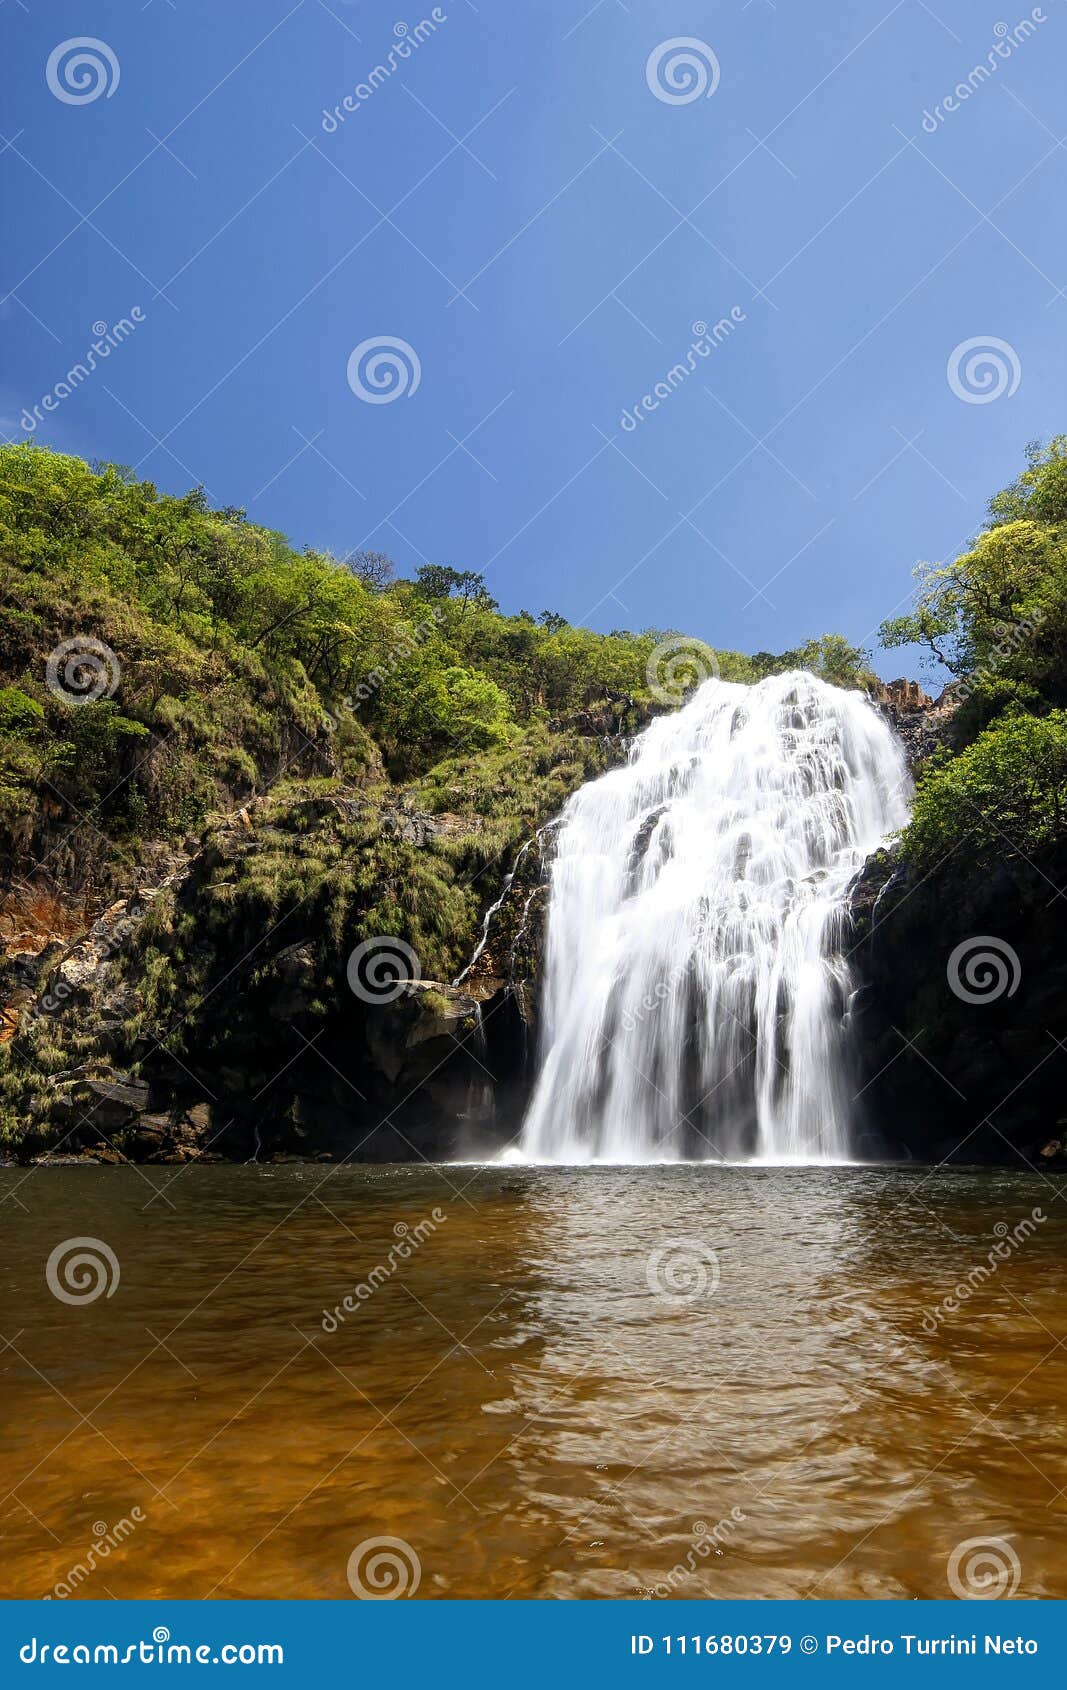 maria augusta waterfall at sao batista do gloria, serra da canastra - minas gerais, brazil